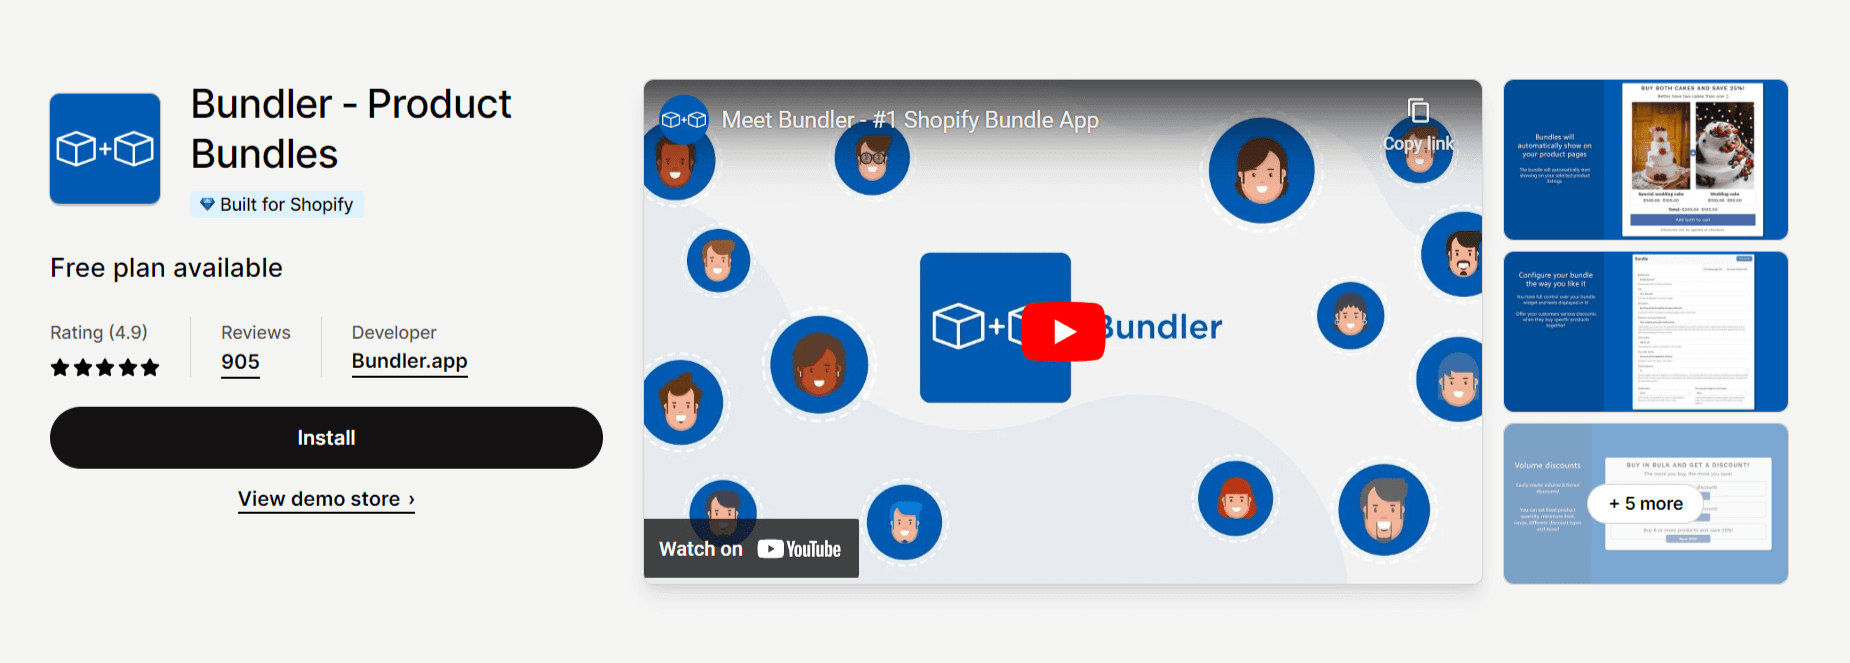 Bundler_Shopify_app